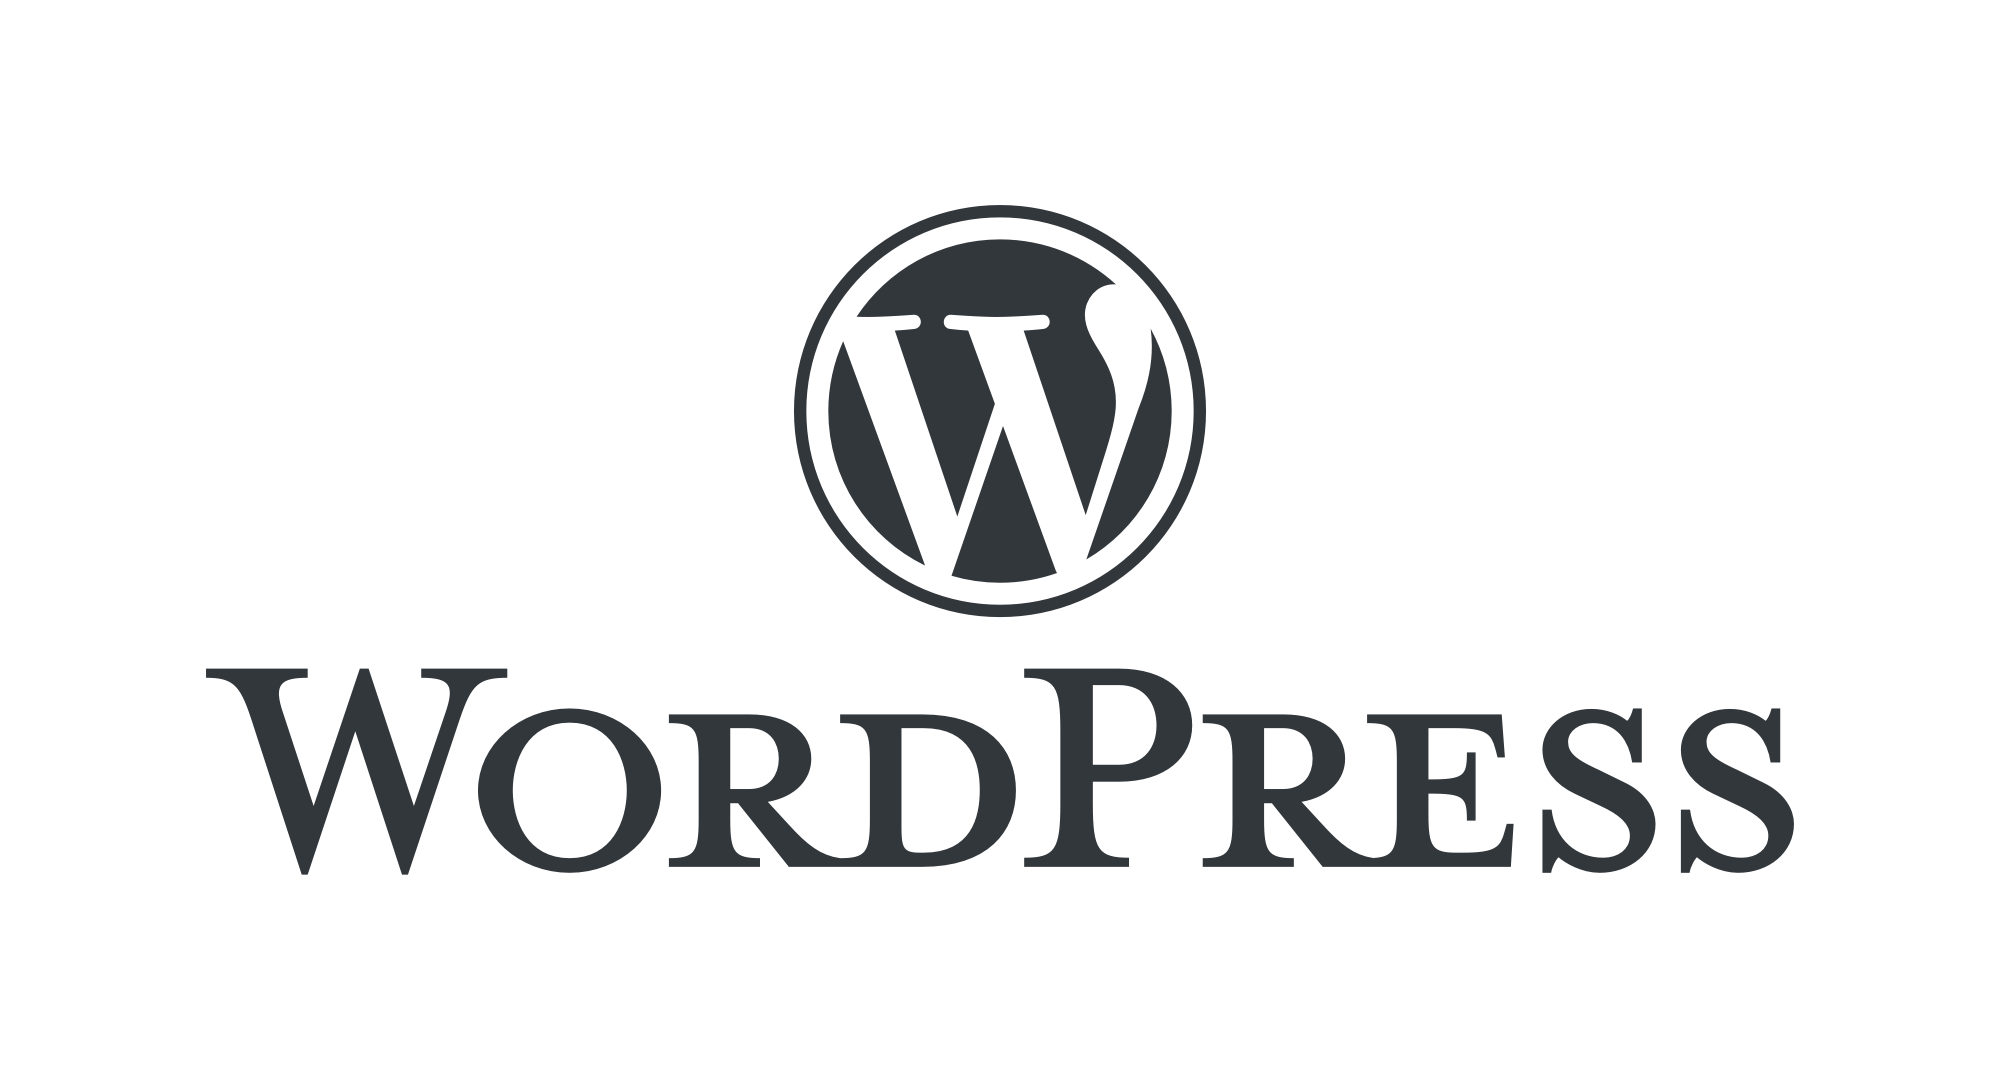 images/system/WordPress-logotype-alternative.png#joomlaImage://local-images/system/WordPress-logotype-alternative.png?width=2000&height=1080